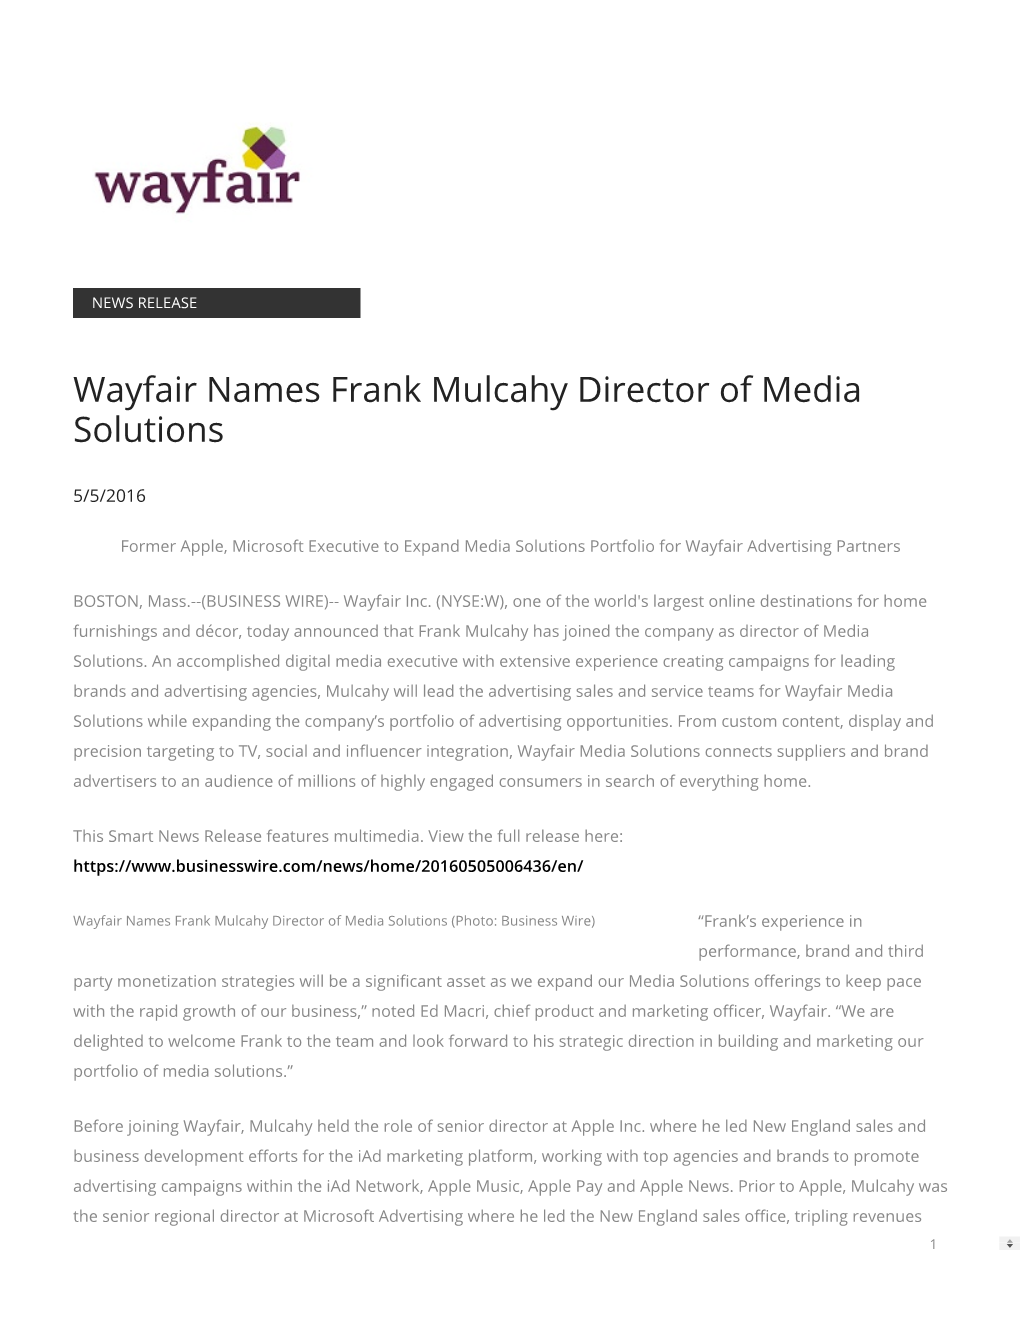 Wayfair Names Frank Mulcahy Director of Media Solutions